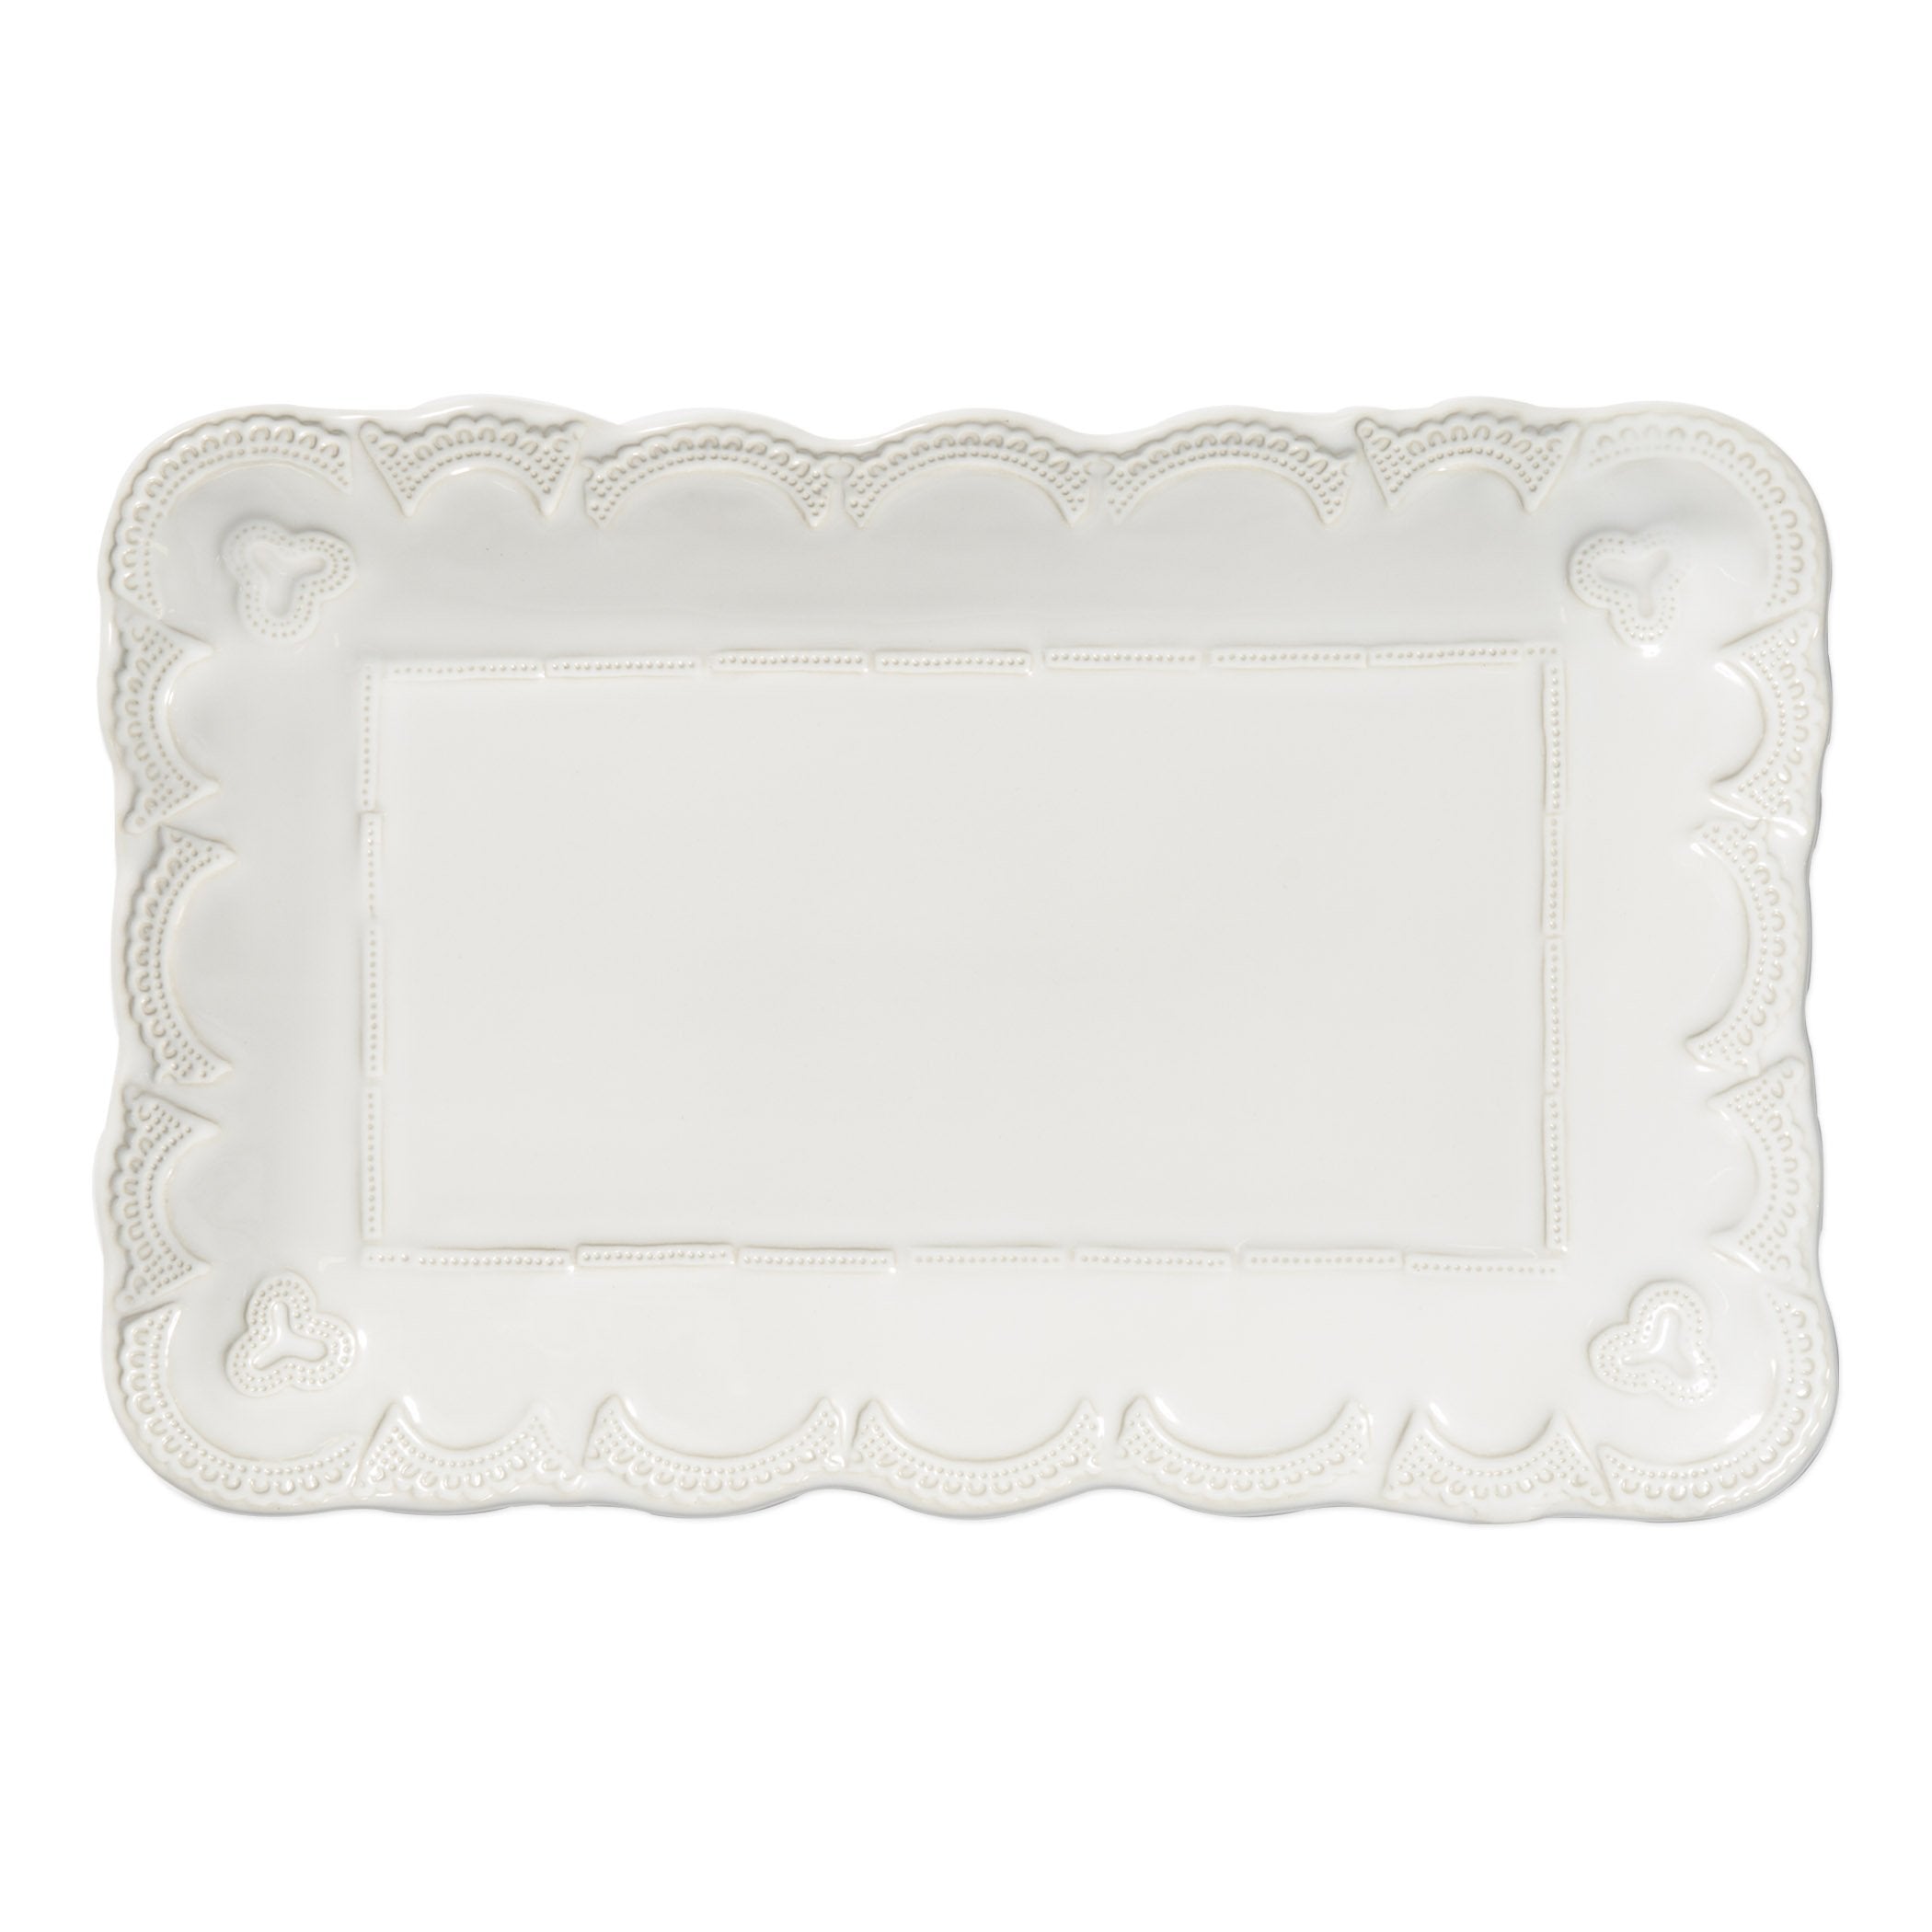 Incanto Stone White Lace Small Rectangular Platter